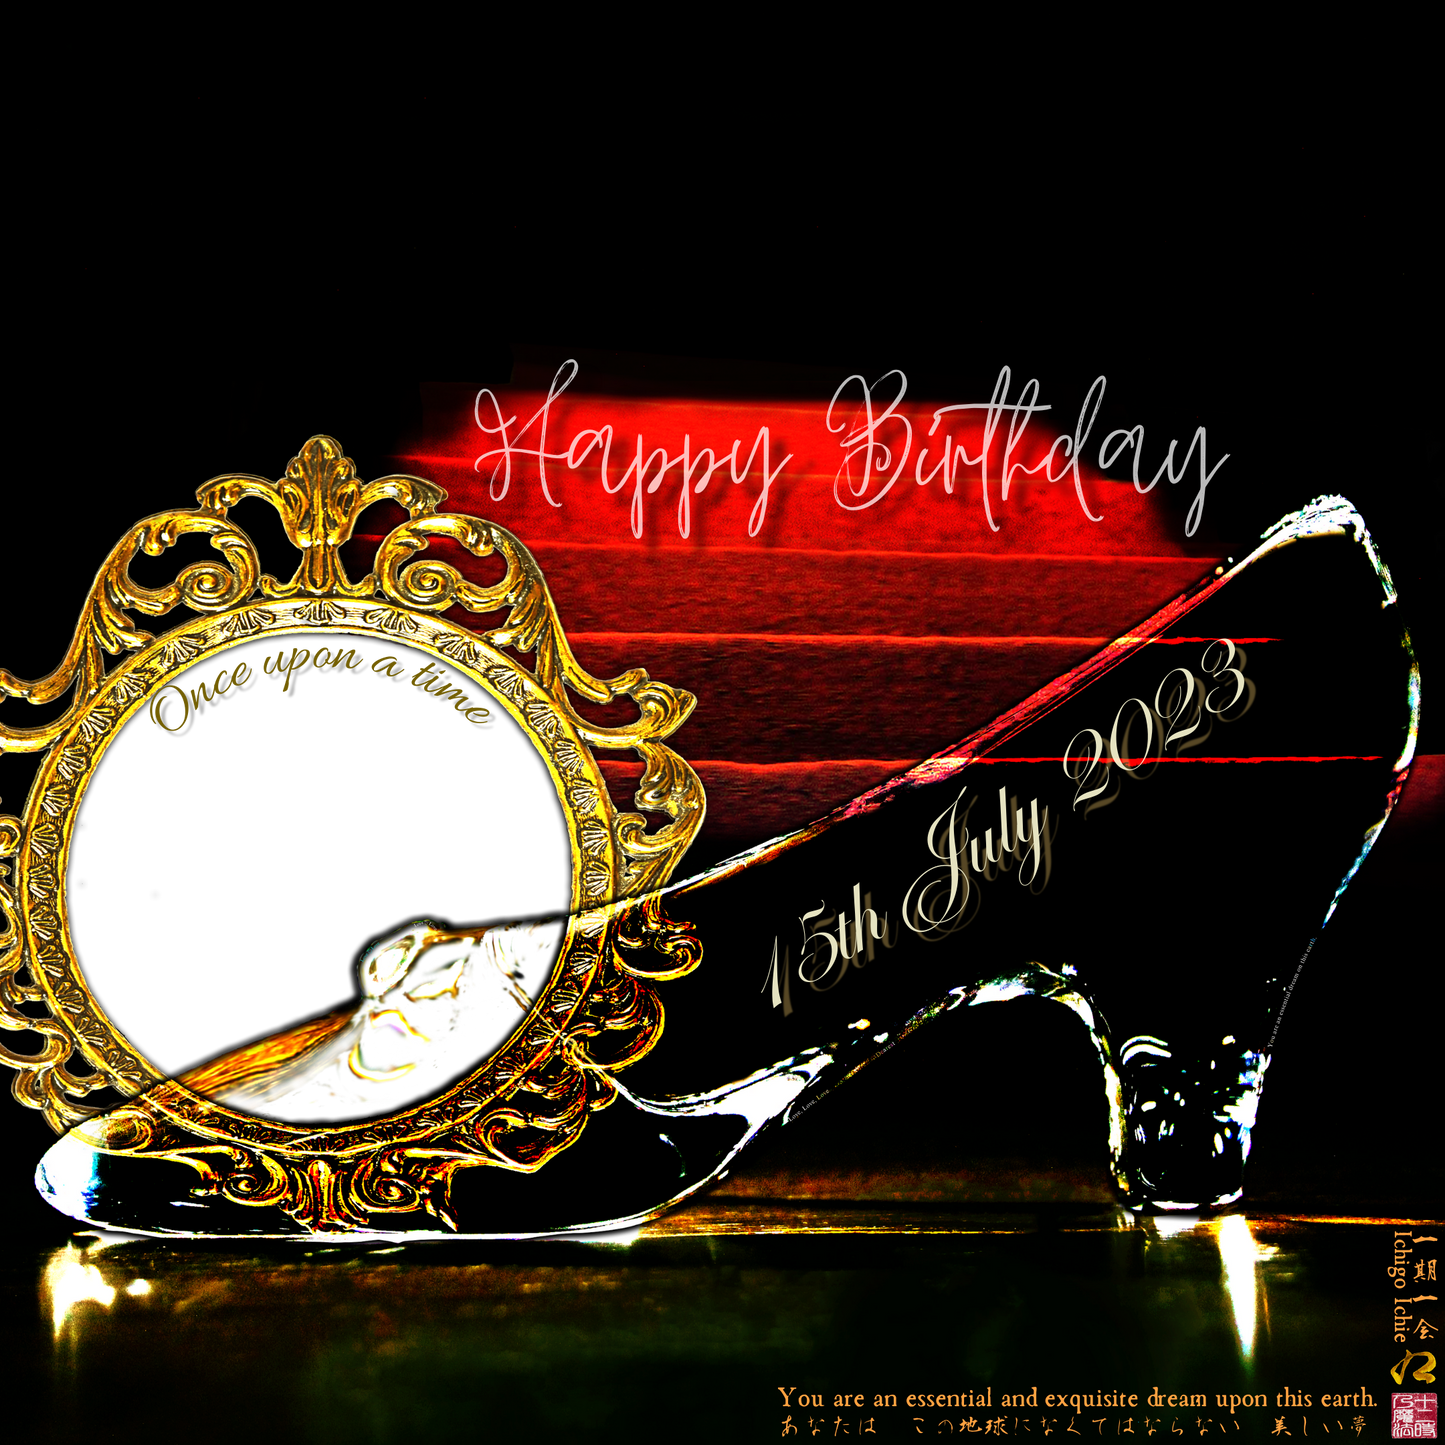 Happy Birthday Glass Slipper "Ichigo Ichie" 15th July 2023 the Left (1-of-1) NFT Art